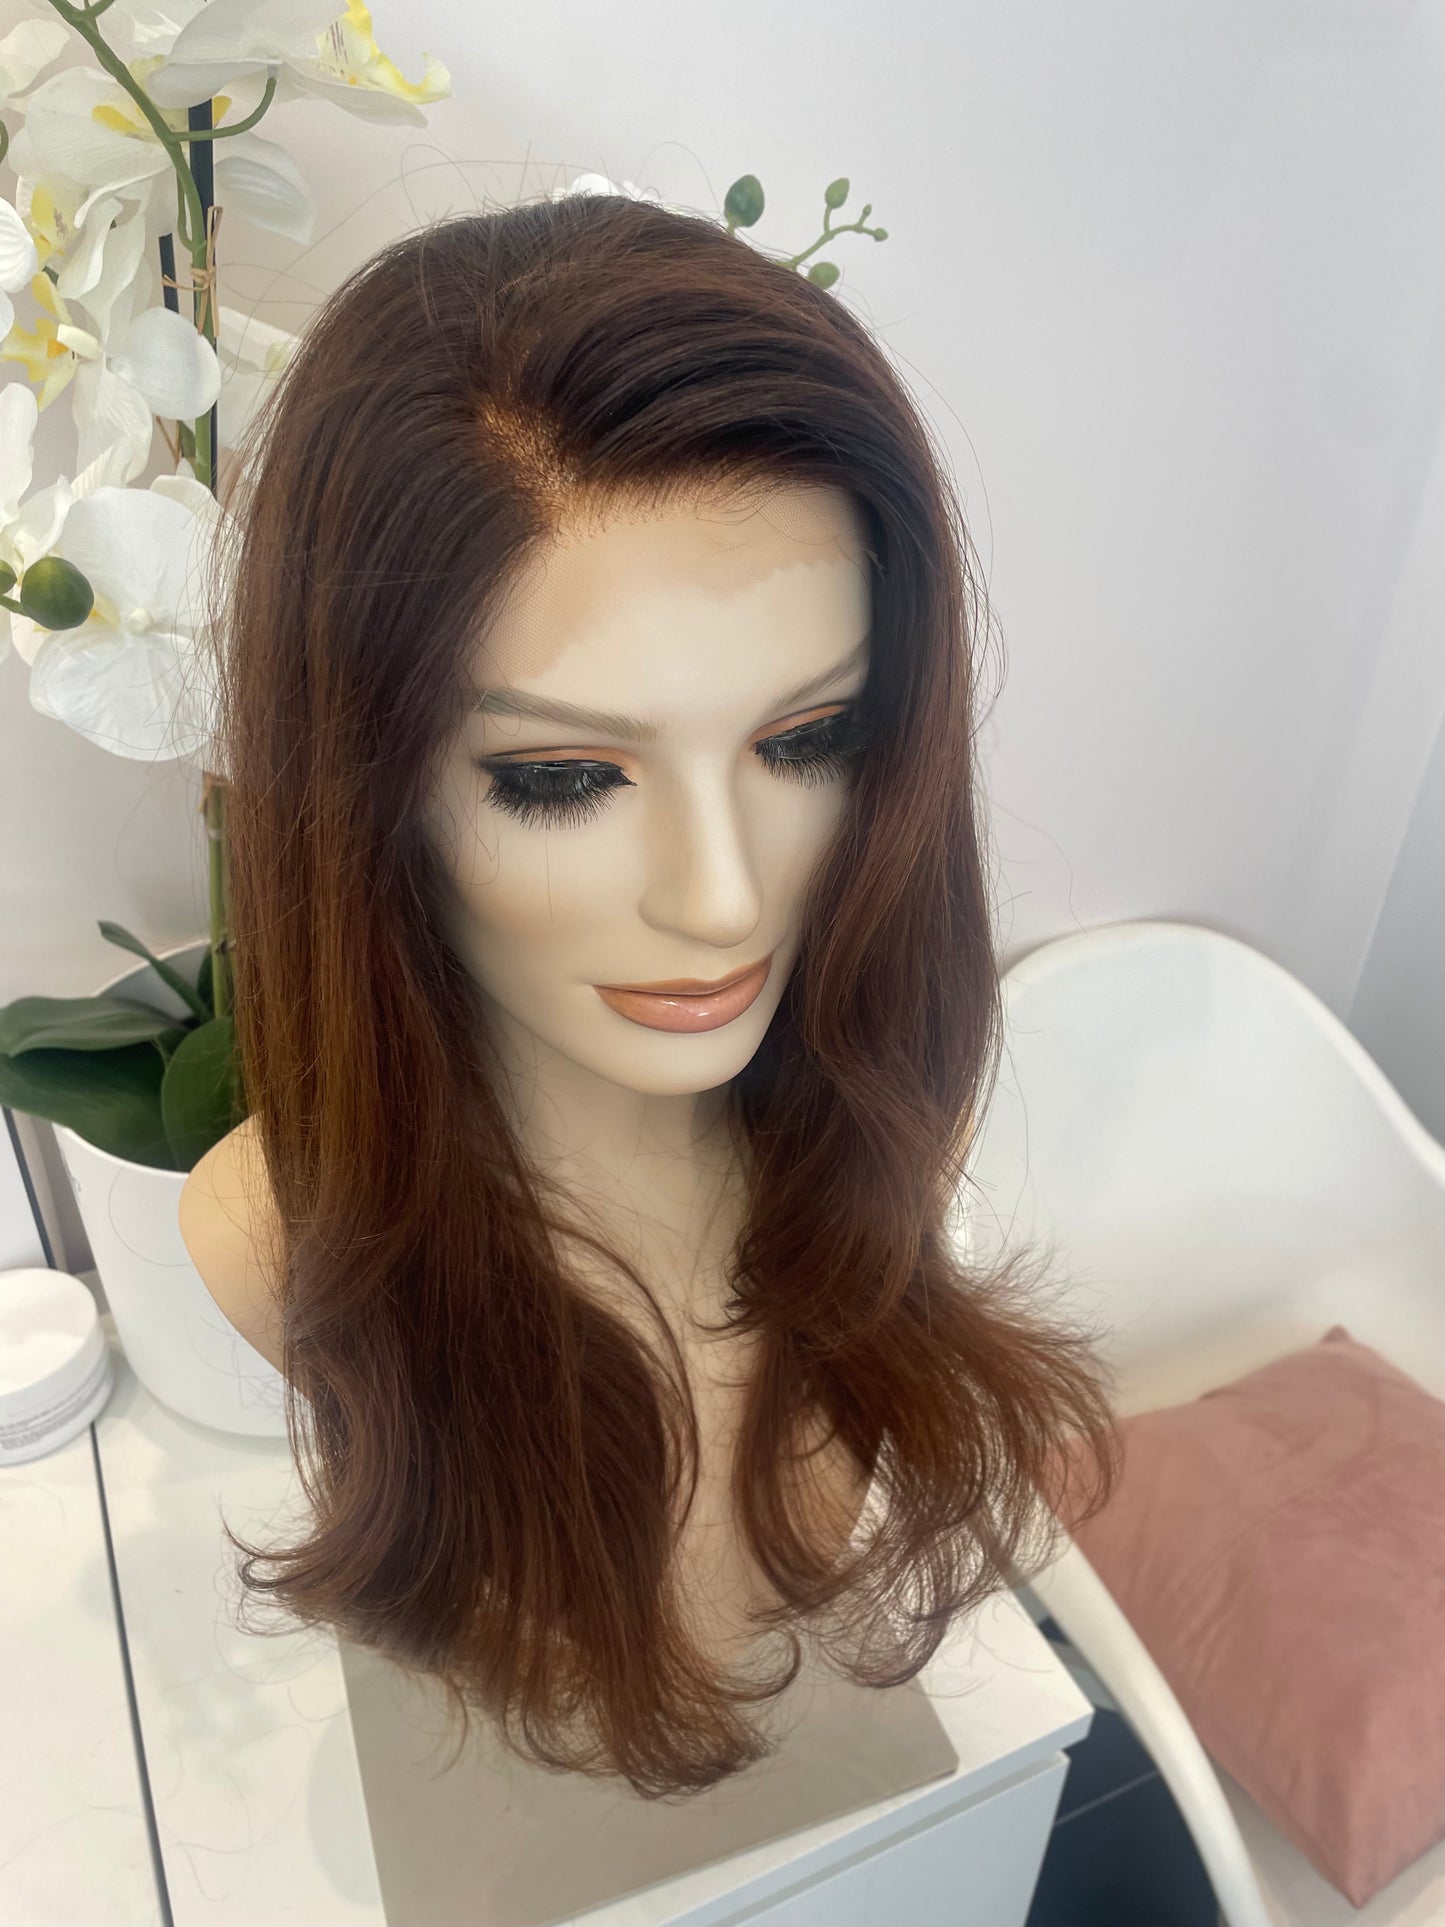 .Anita - Intégral front lace top 3"x 4" / 18 inch / 150 % Volume / European hair / medium